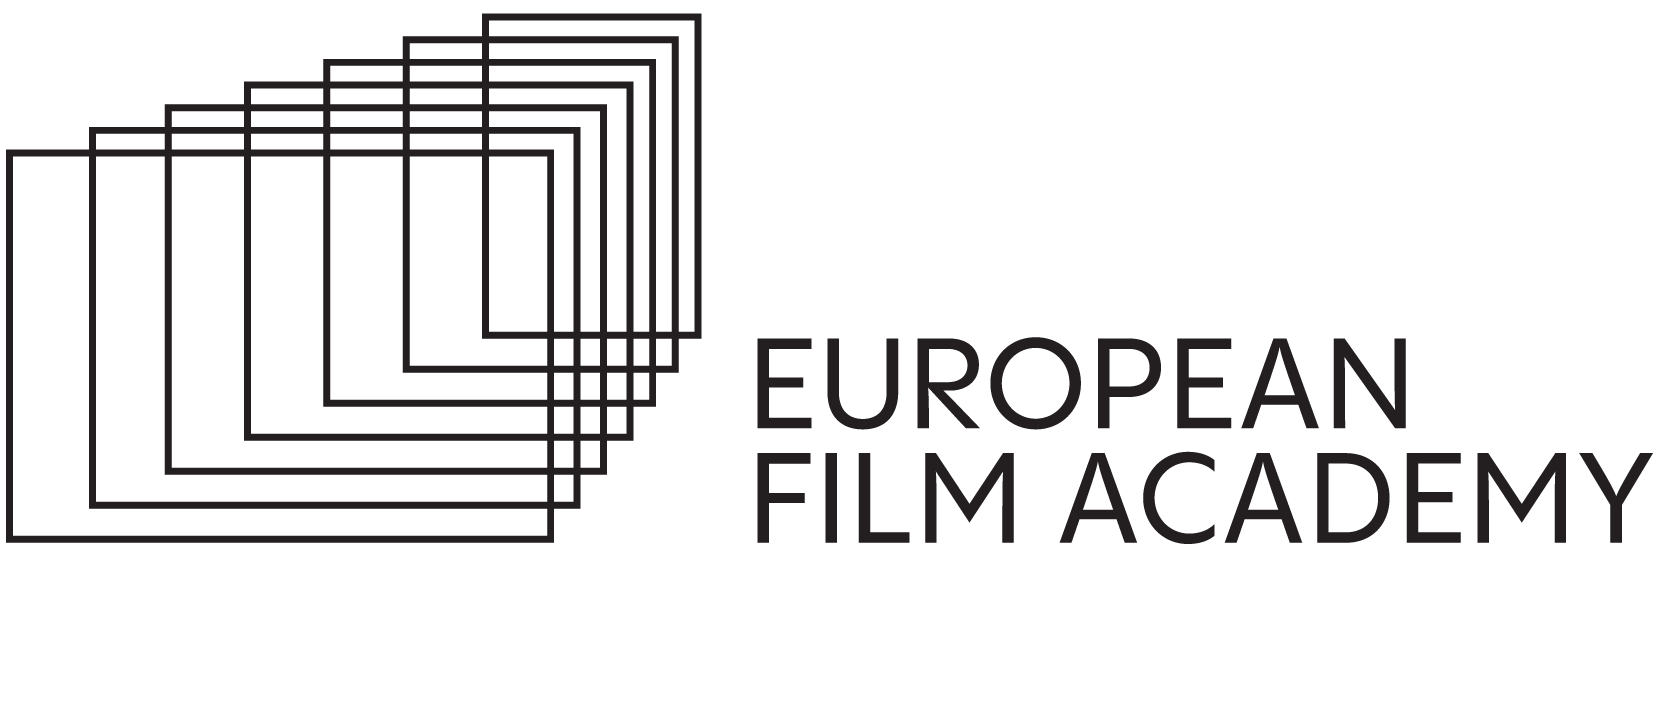 european film academy logo